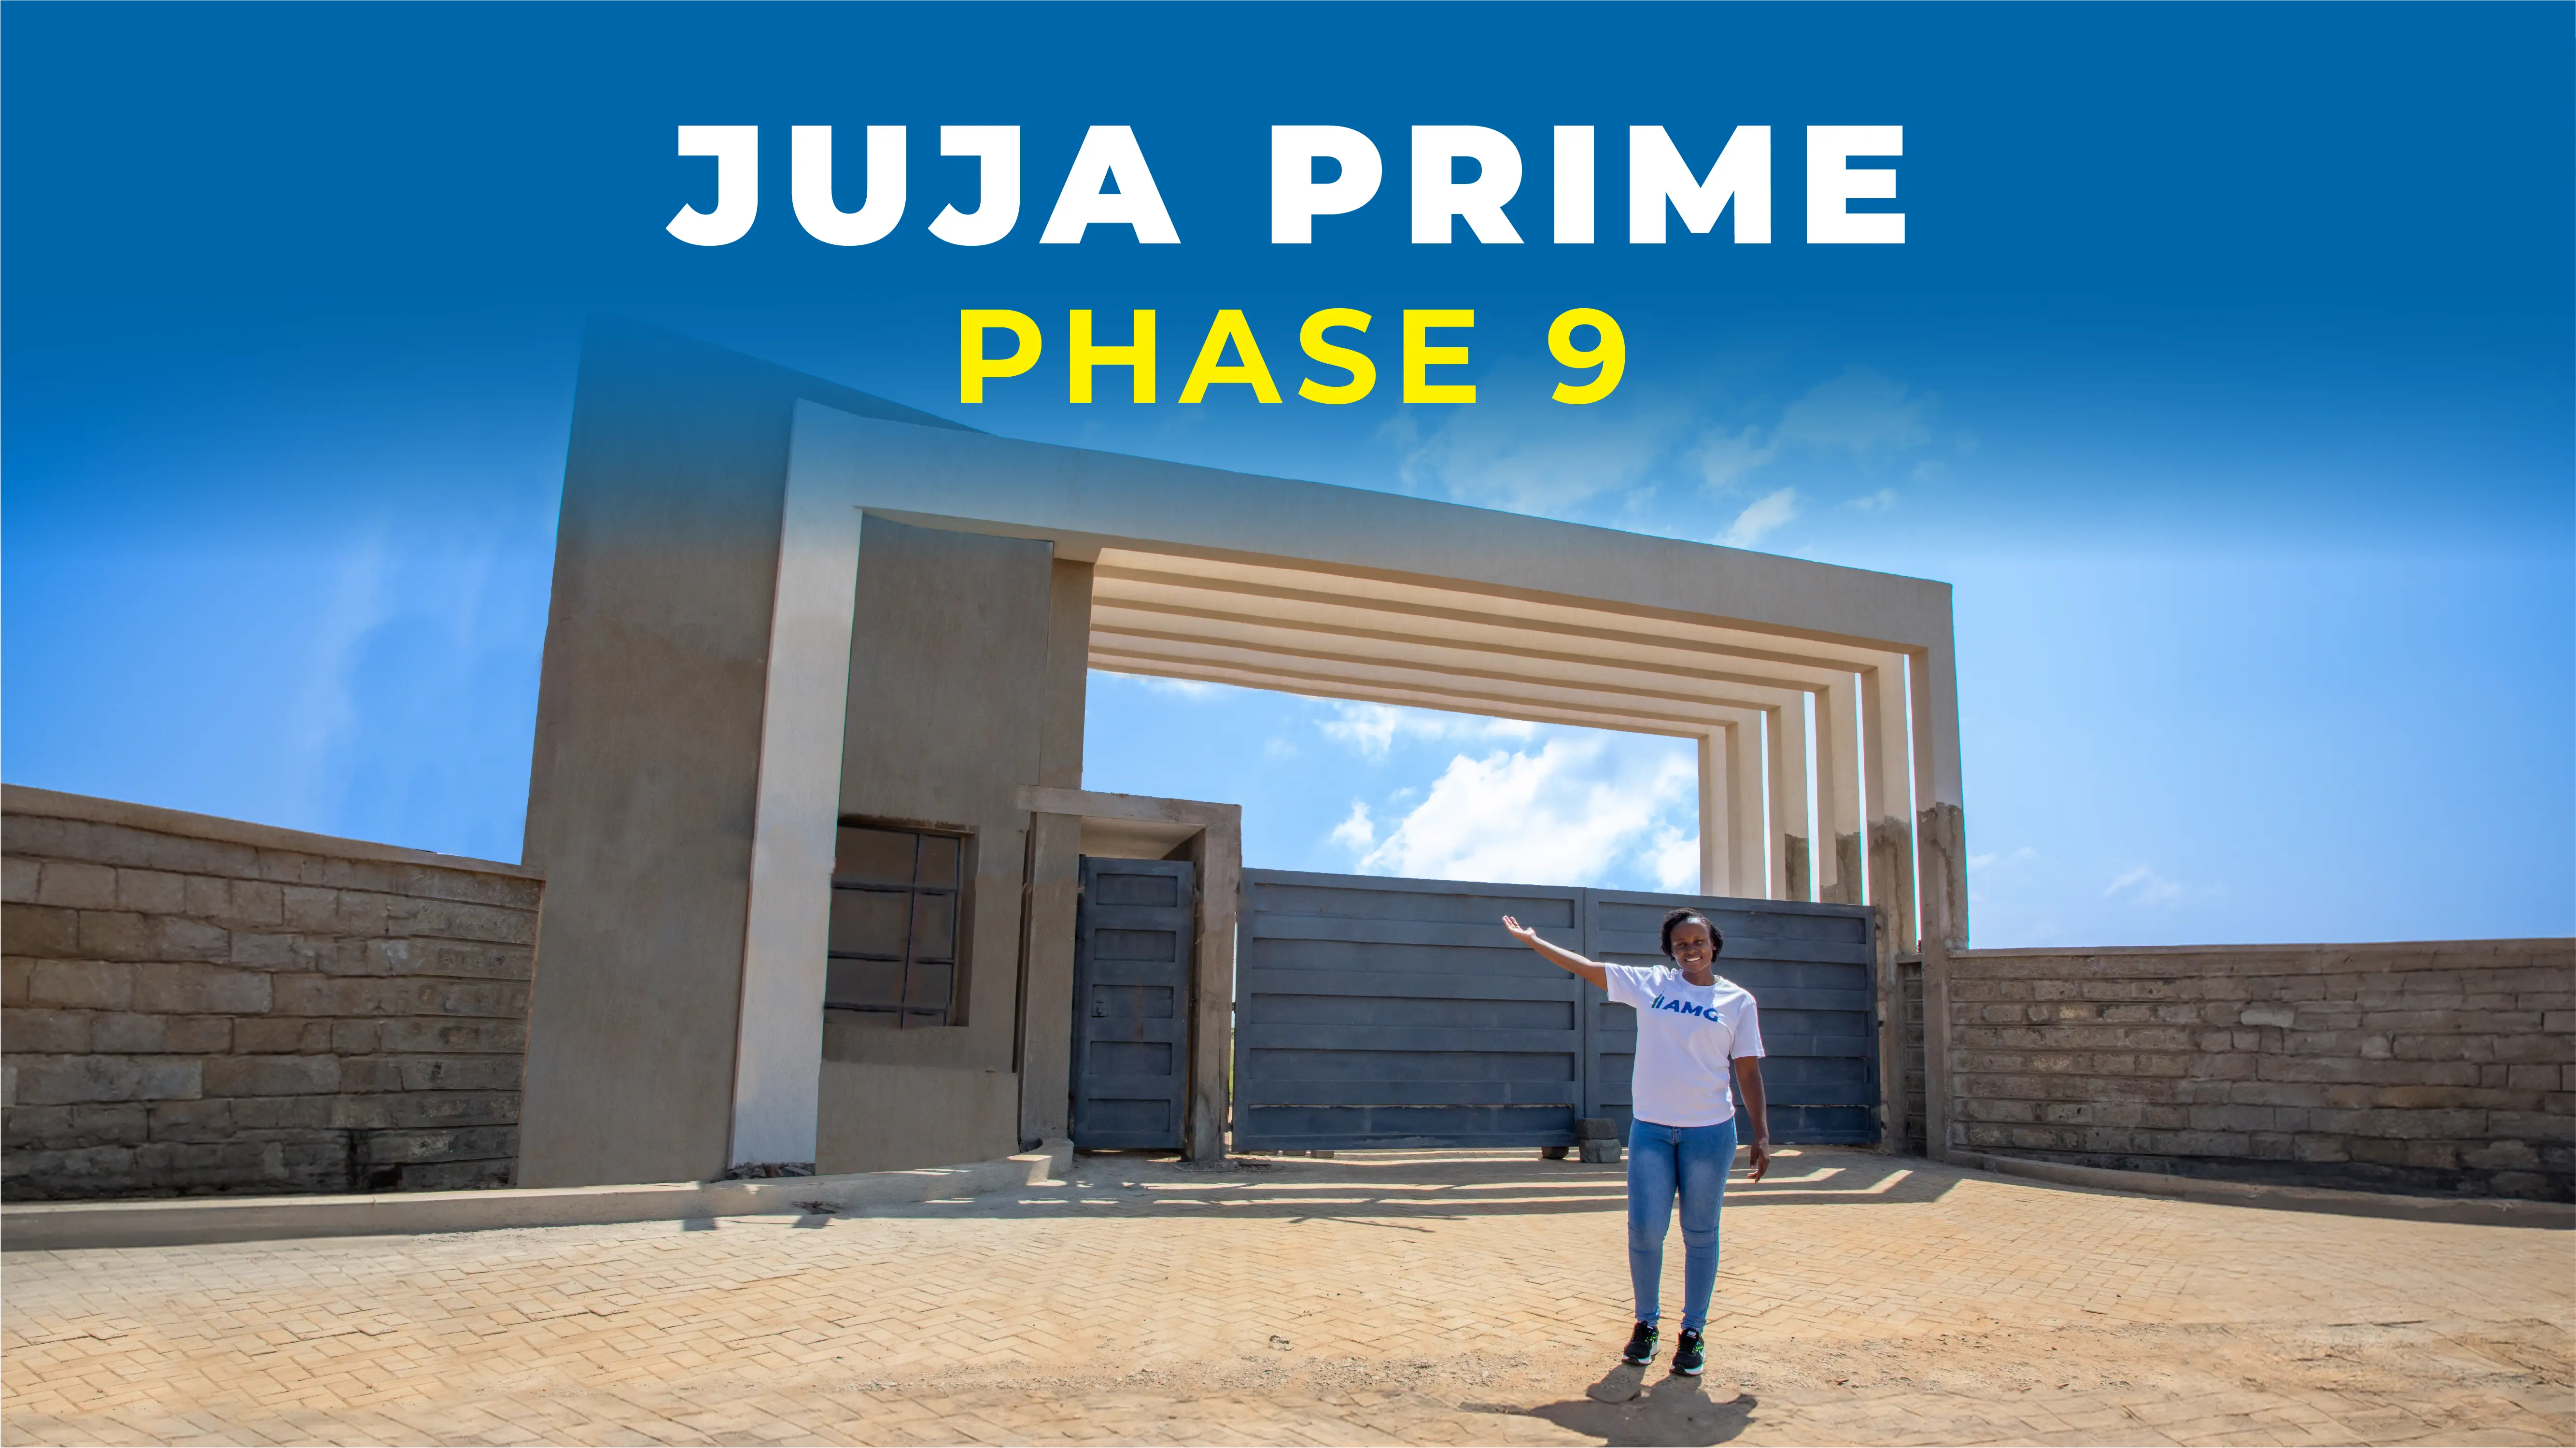 Land for sale Juja Prime Phase 9